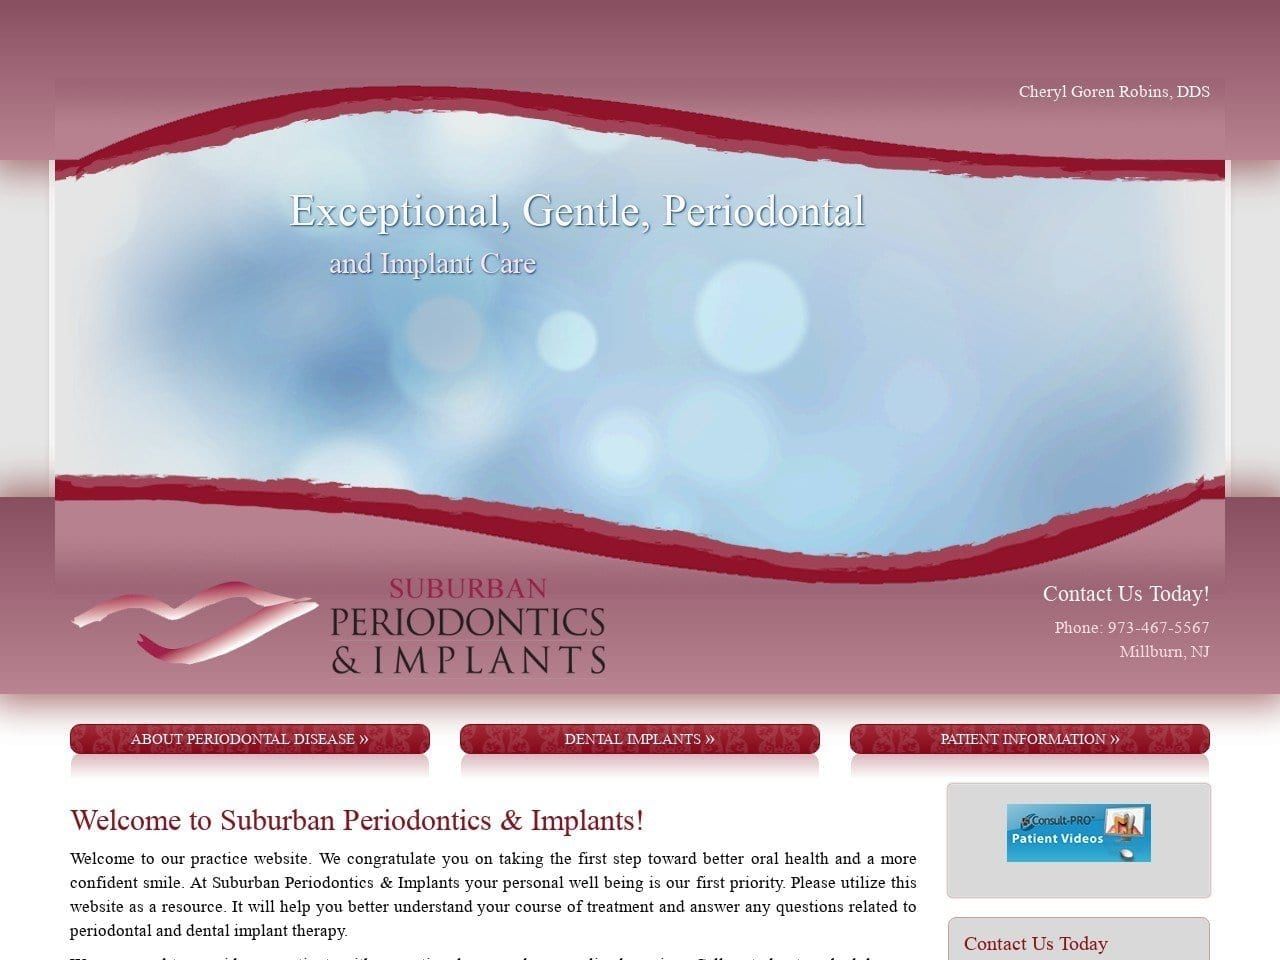 Suburban Periodontics and Implants Website Screenshot from suburban-perio.com